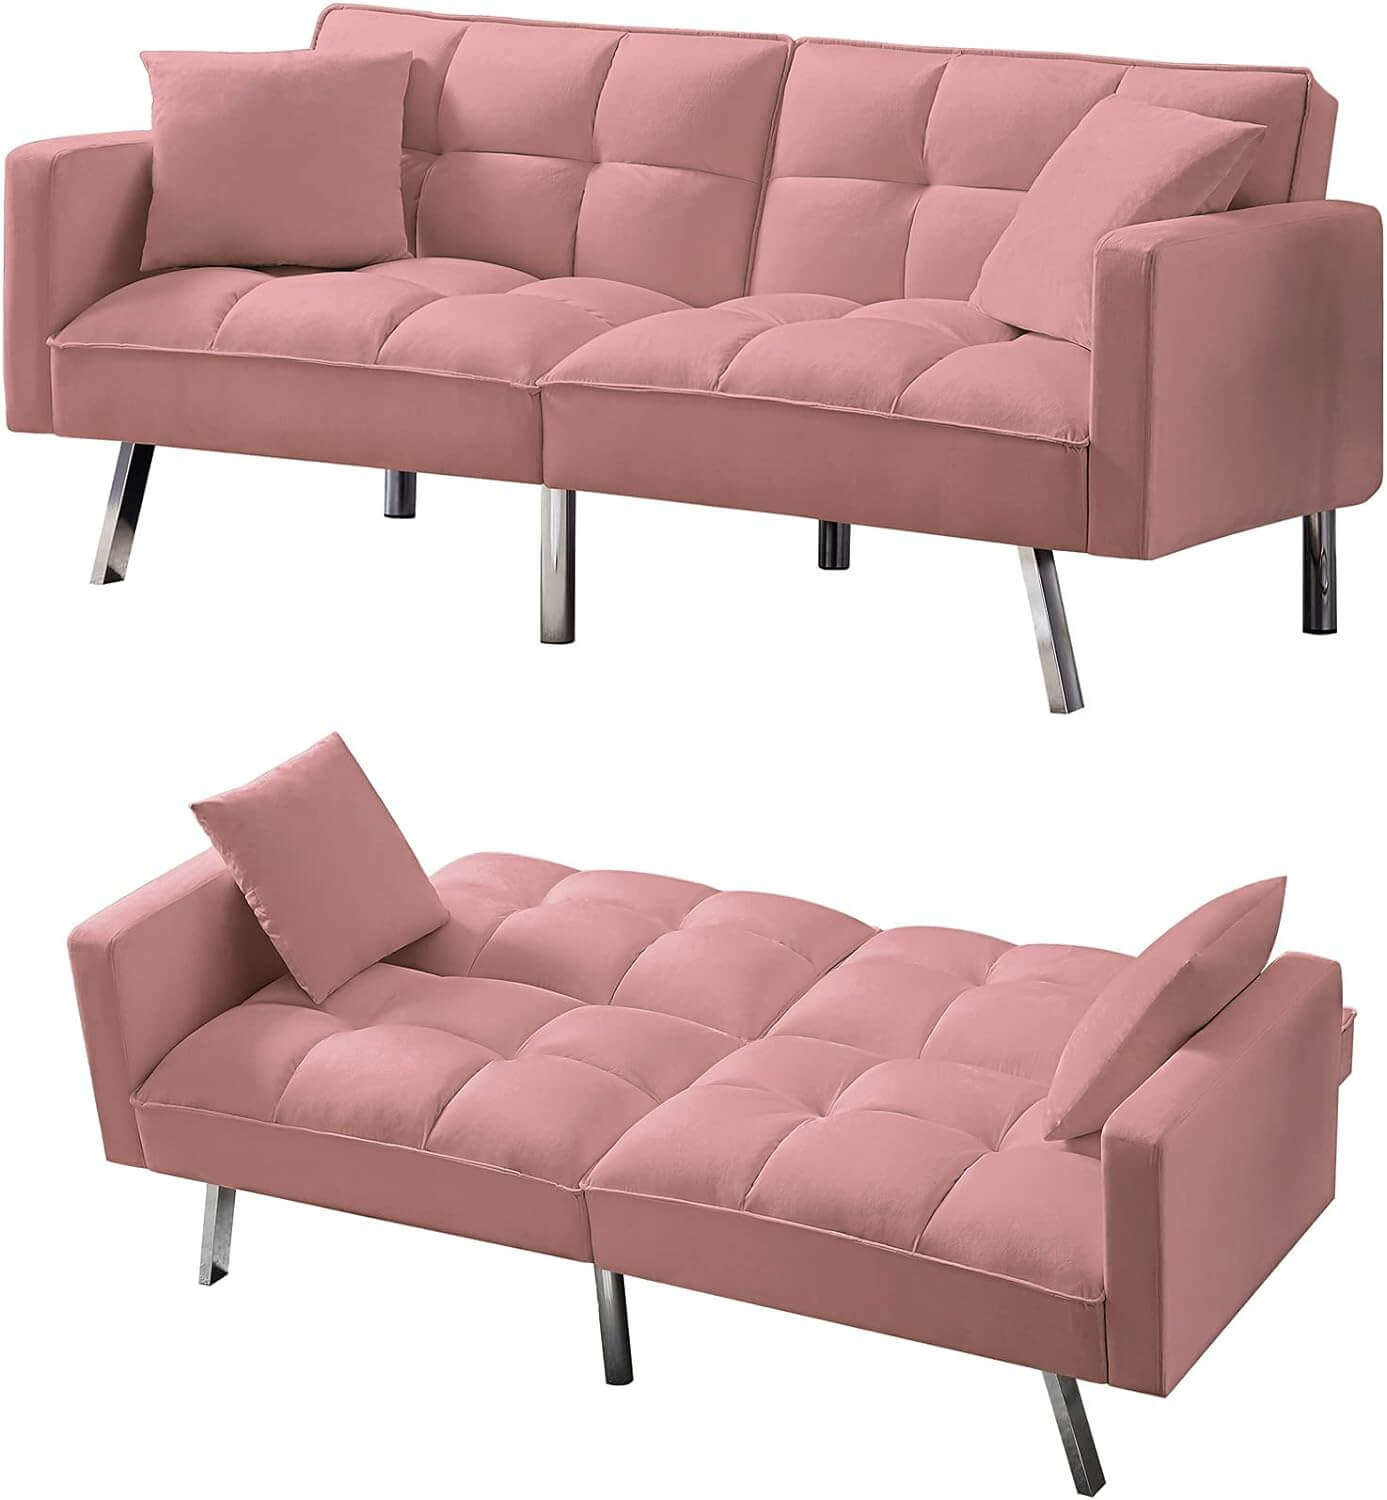 Olela Modern Tuft Futon Couch Convertible Loveseat Sleeper Reclining Sofa Bed